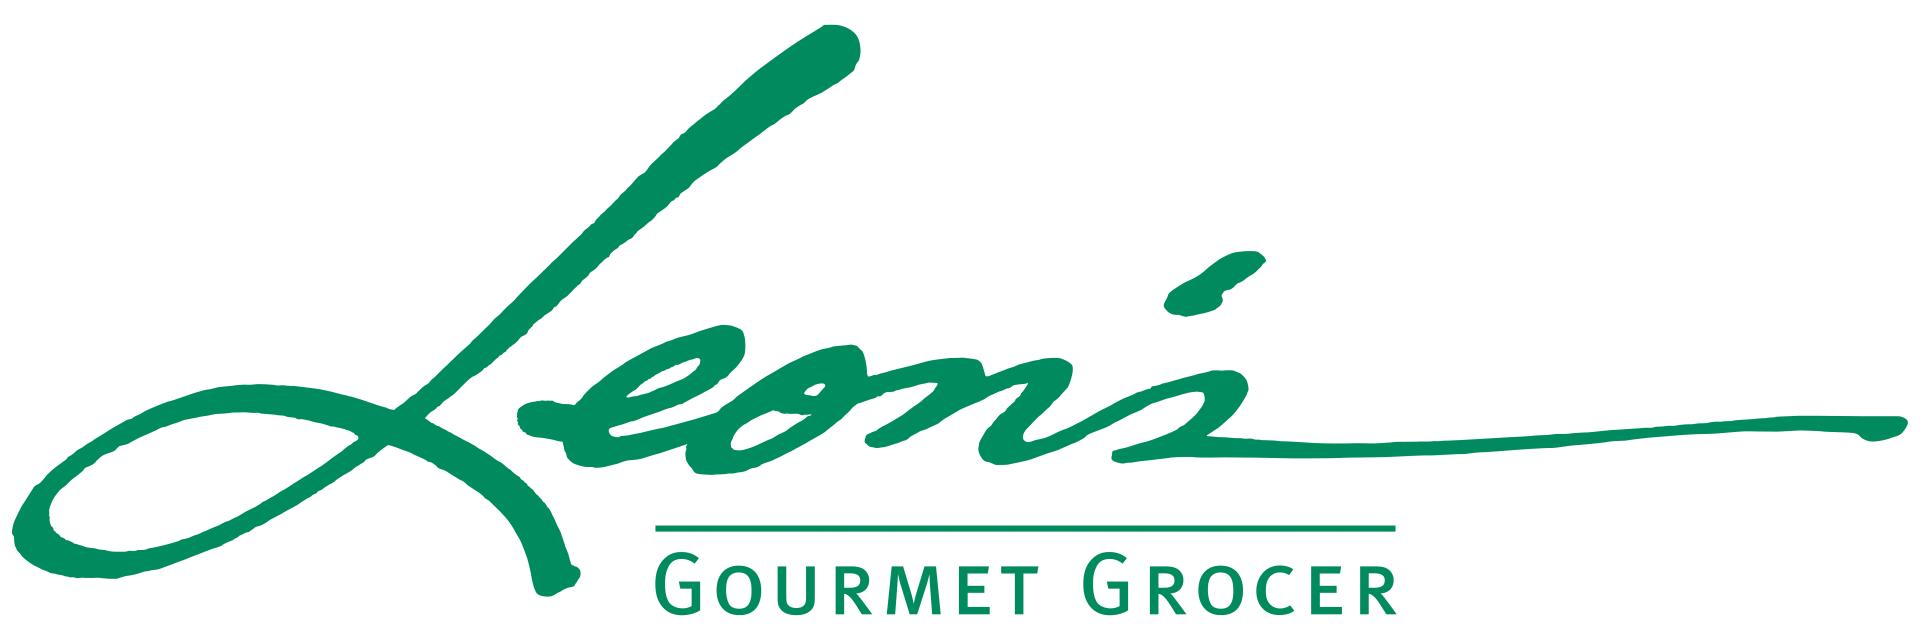 Leon's Gourmet Grocer Logo